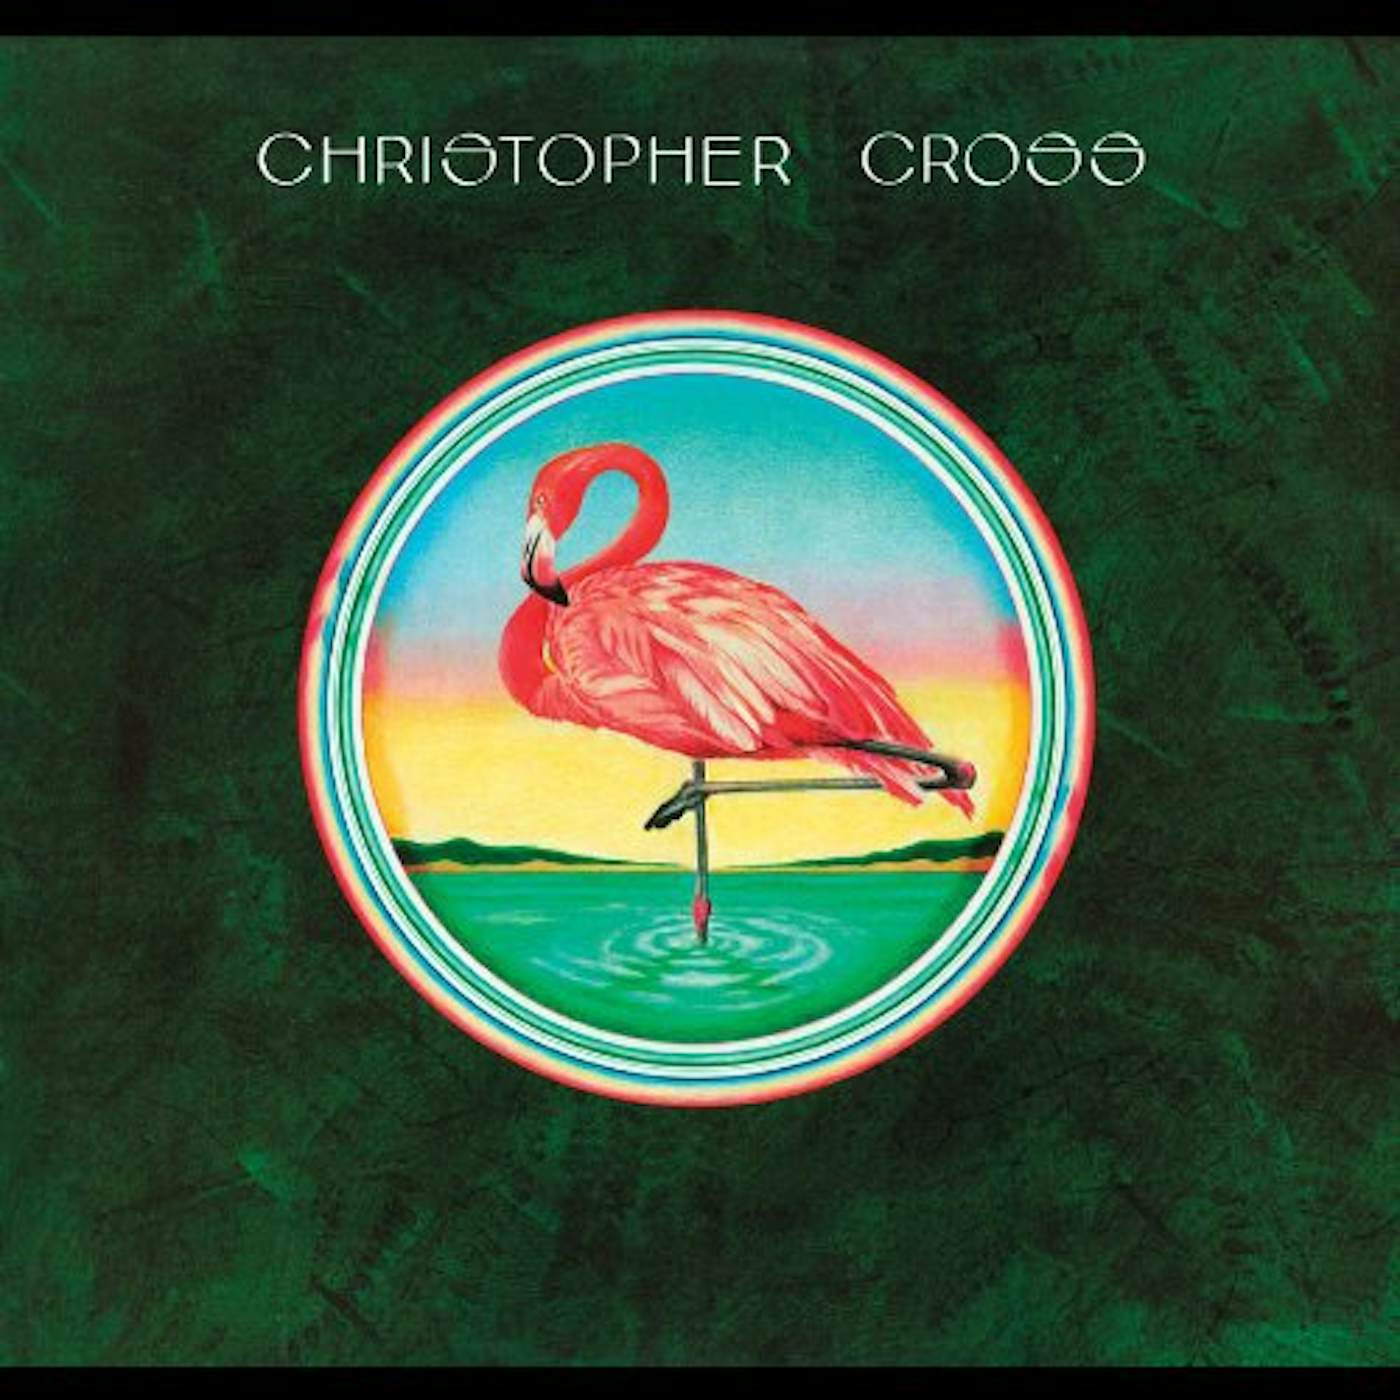 Christopher Cross Vinyl Record